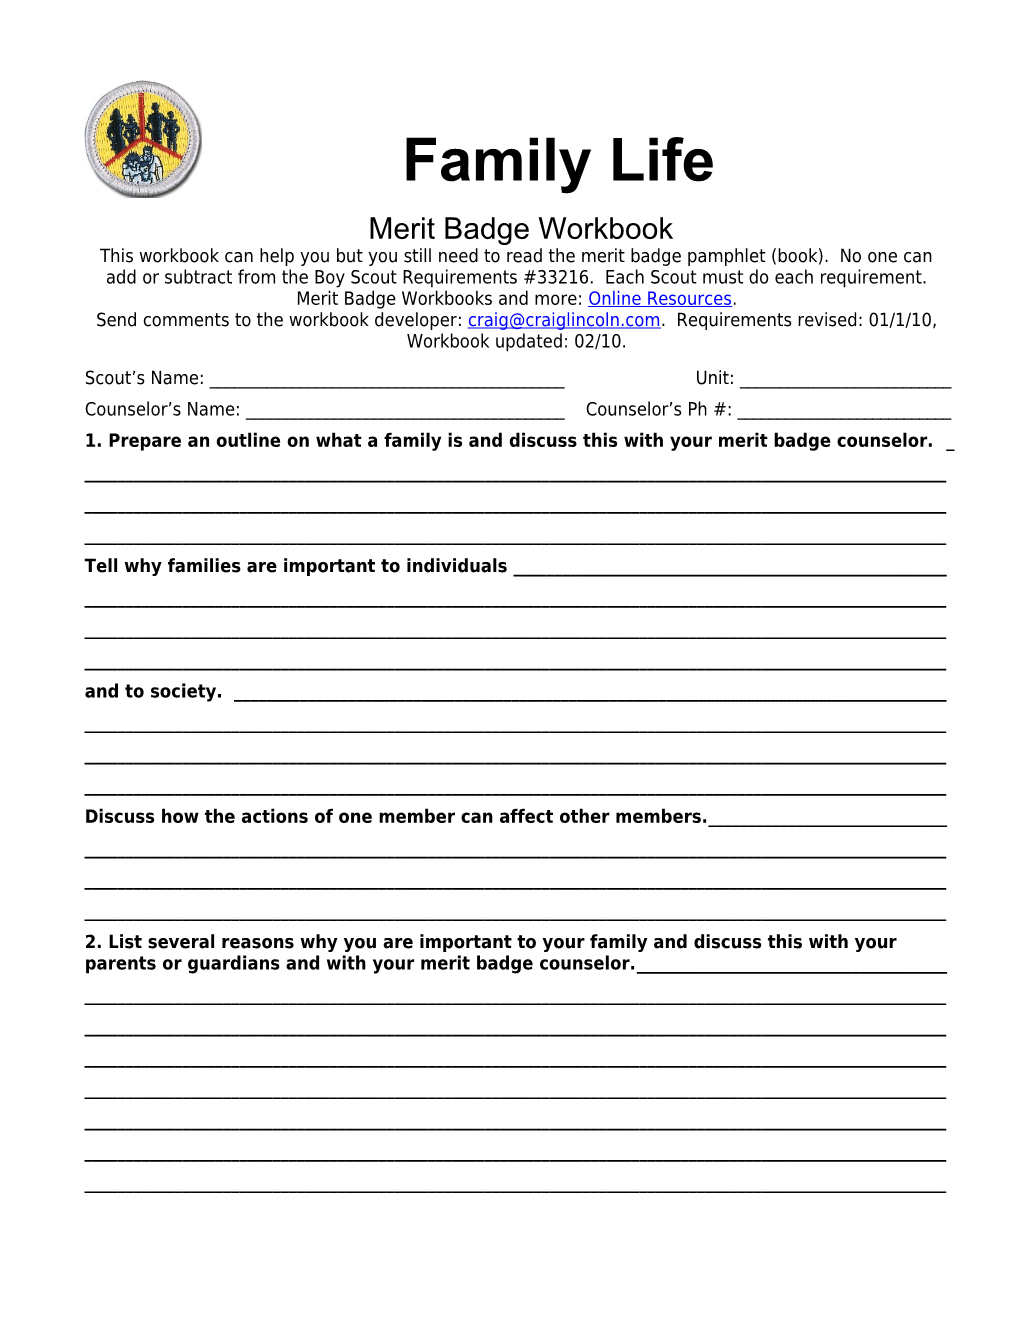 Family Life P. 1 Merit Badge Workbookscout S Name: ______